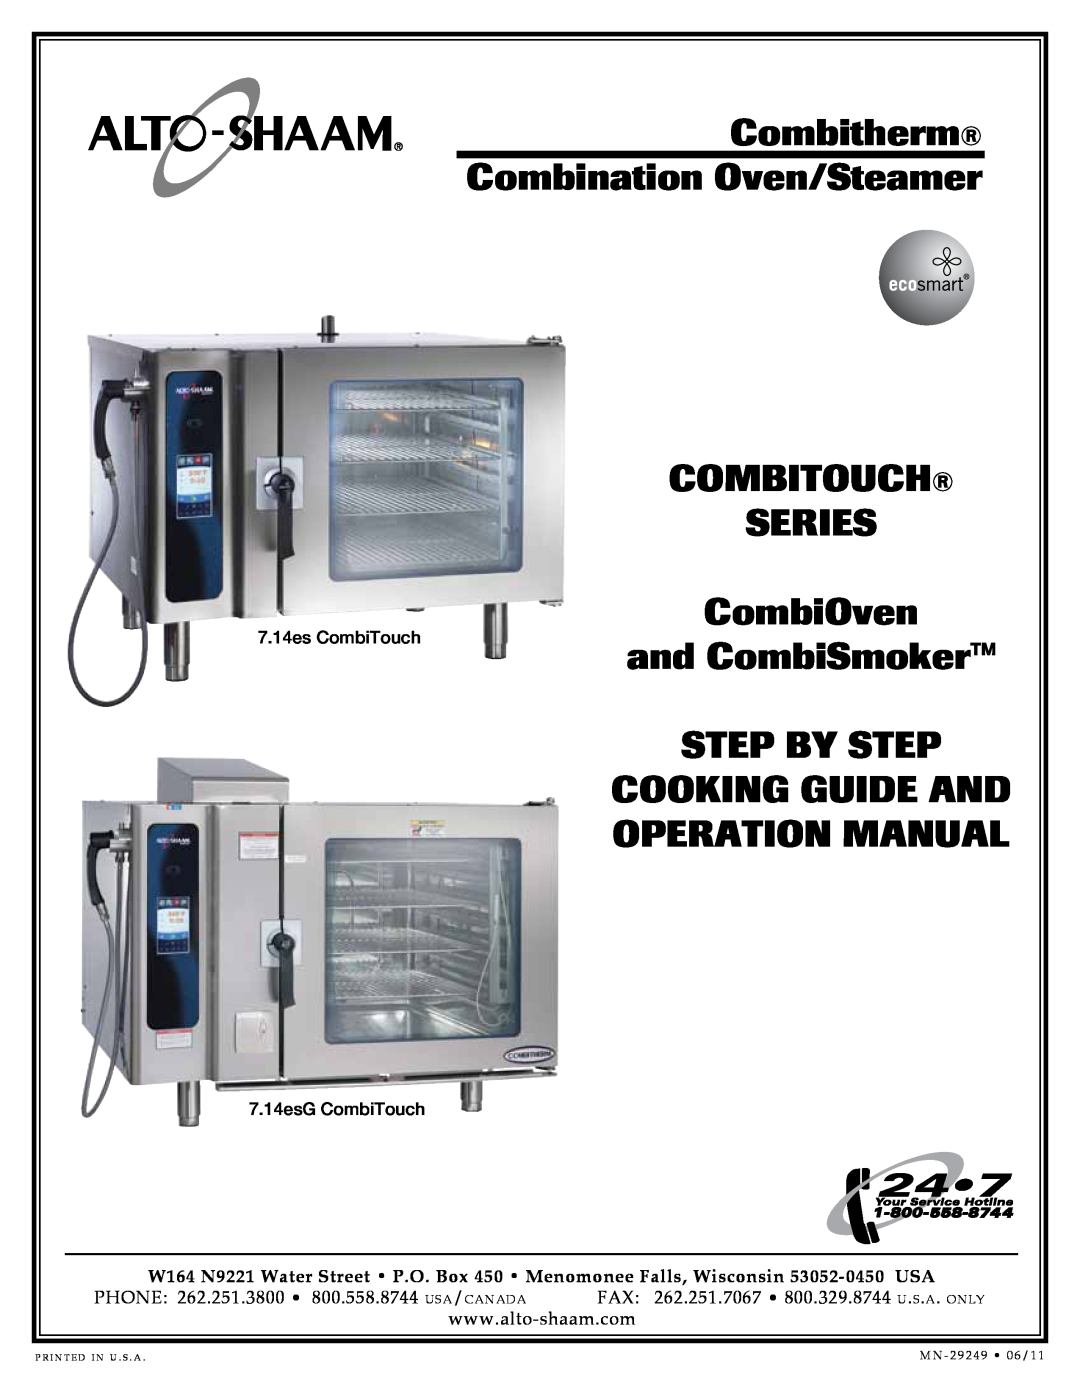 Alto-Shaam 7.14ESG operation manual 7.14es CombiTouch 7.14esG CombiTouch, PhOne 262.251.3800 800.558.8744 USA/CANADA 